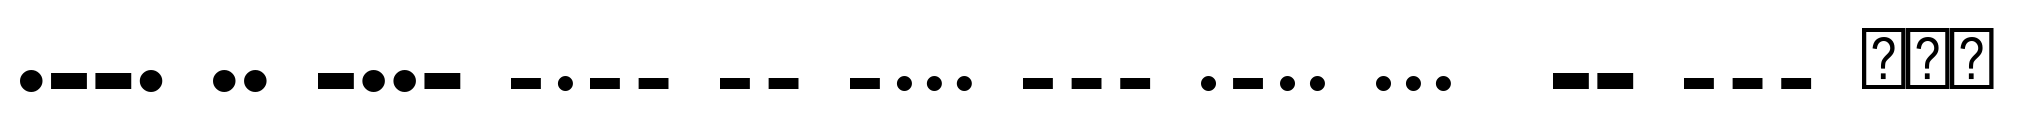 PIXymbols Morse Regular image